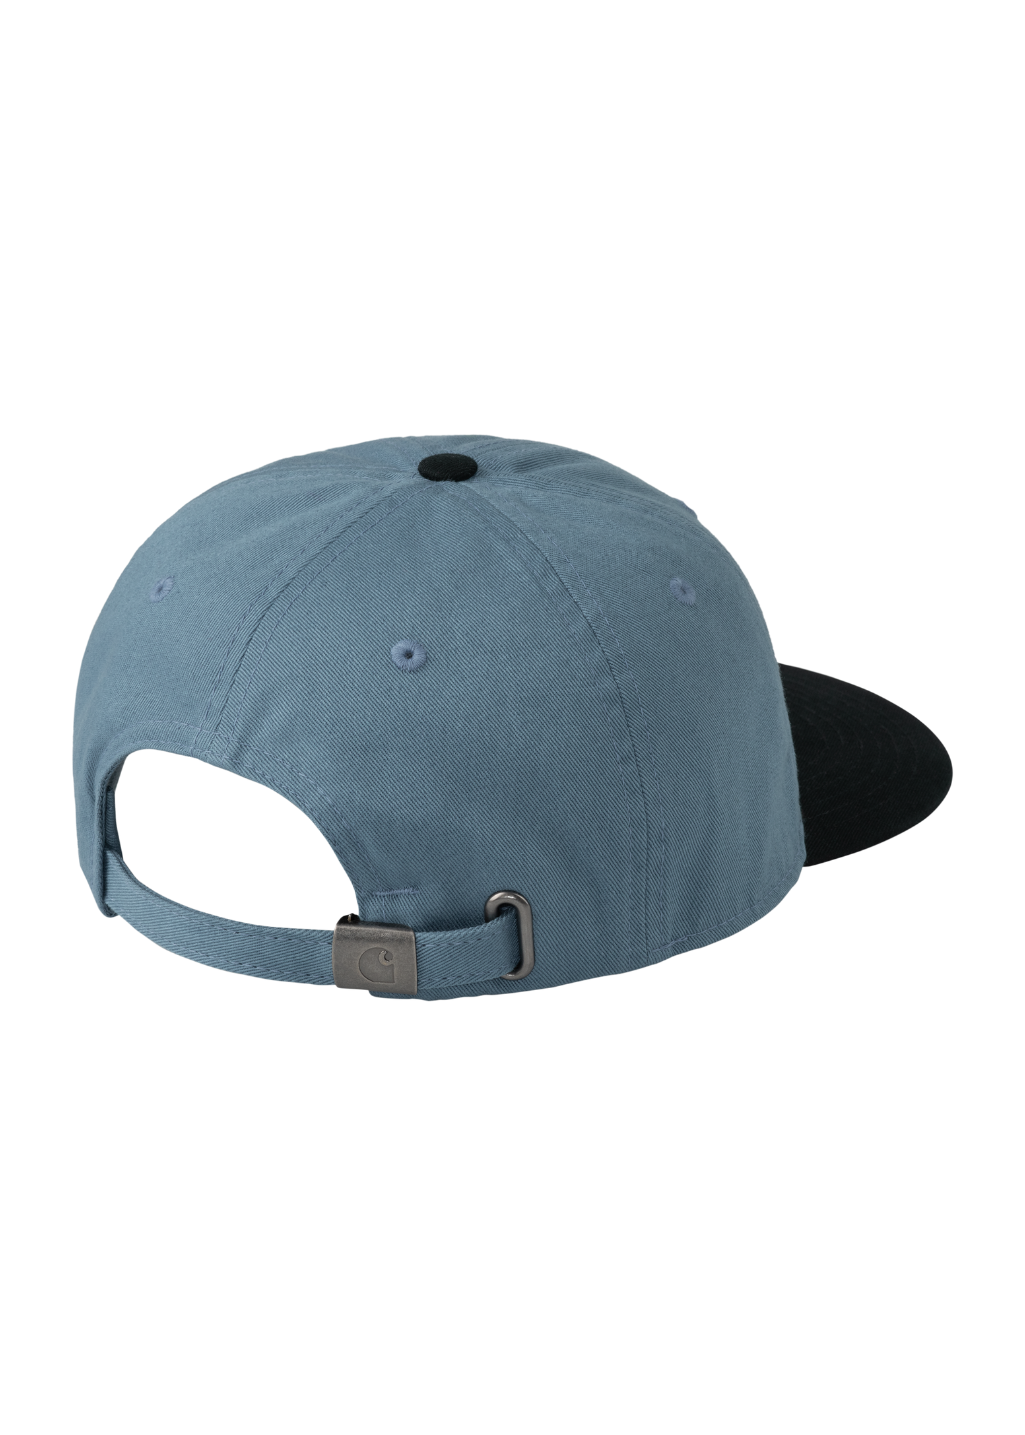 LBECLEY Fashion Tidbits Hat Fashion Women Men Sport Tie Dye Print  Breathable Beach Baseball Cap Hop Hat Sun Hat Mesh Fitted Cap for Men Blue  One Size